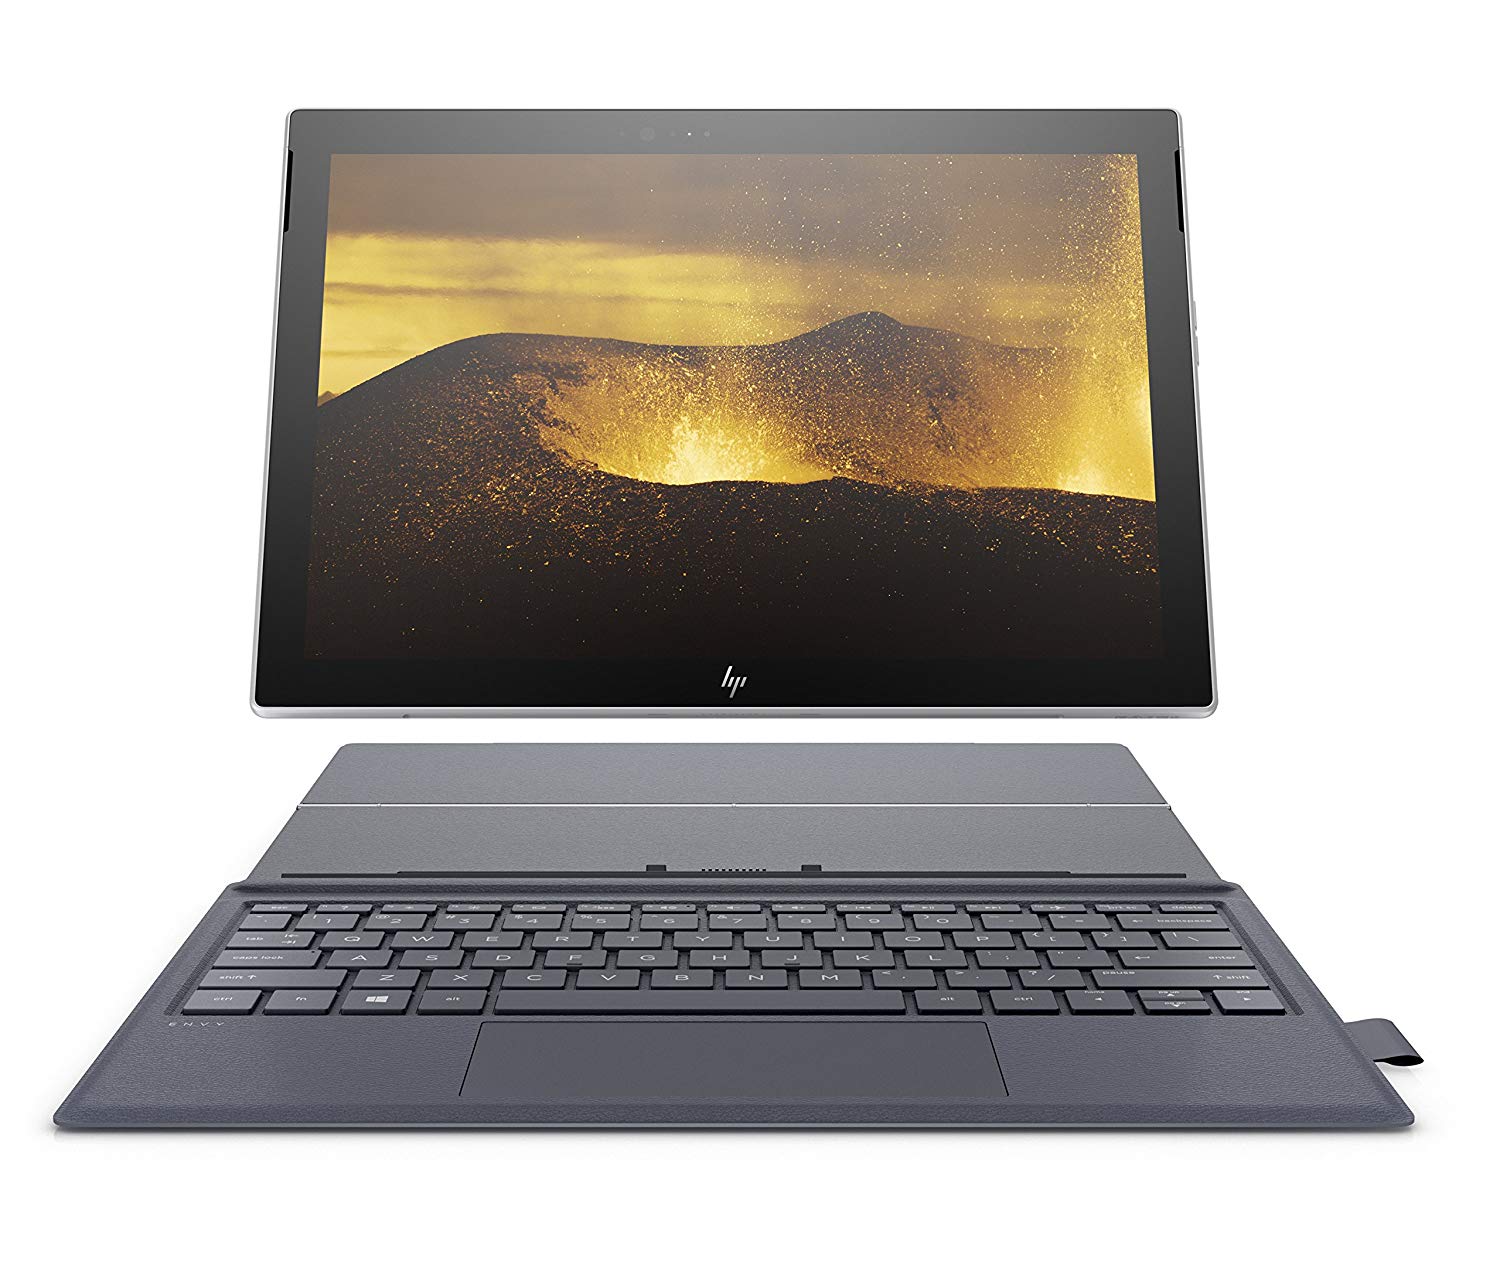 HP Envy x2 12-inch Detachable Laptop with Stylus Pen and 4G LTE, Qualcomm Snapdragon 835 Processor, 4 GB RAM, 128 GB Flash Storage, Windows 10 (12-e091ms, Silver/Blue)